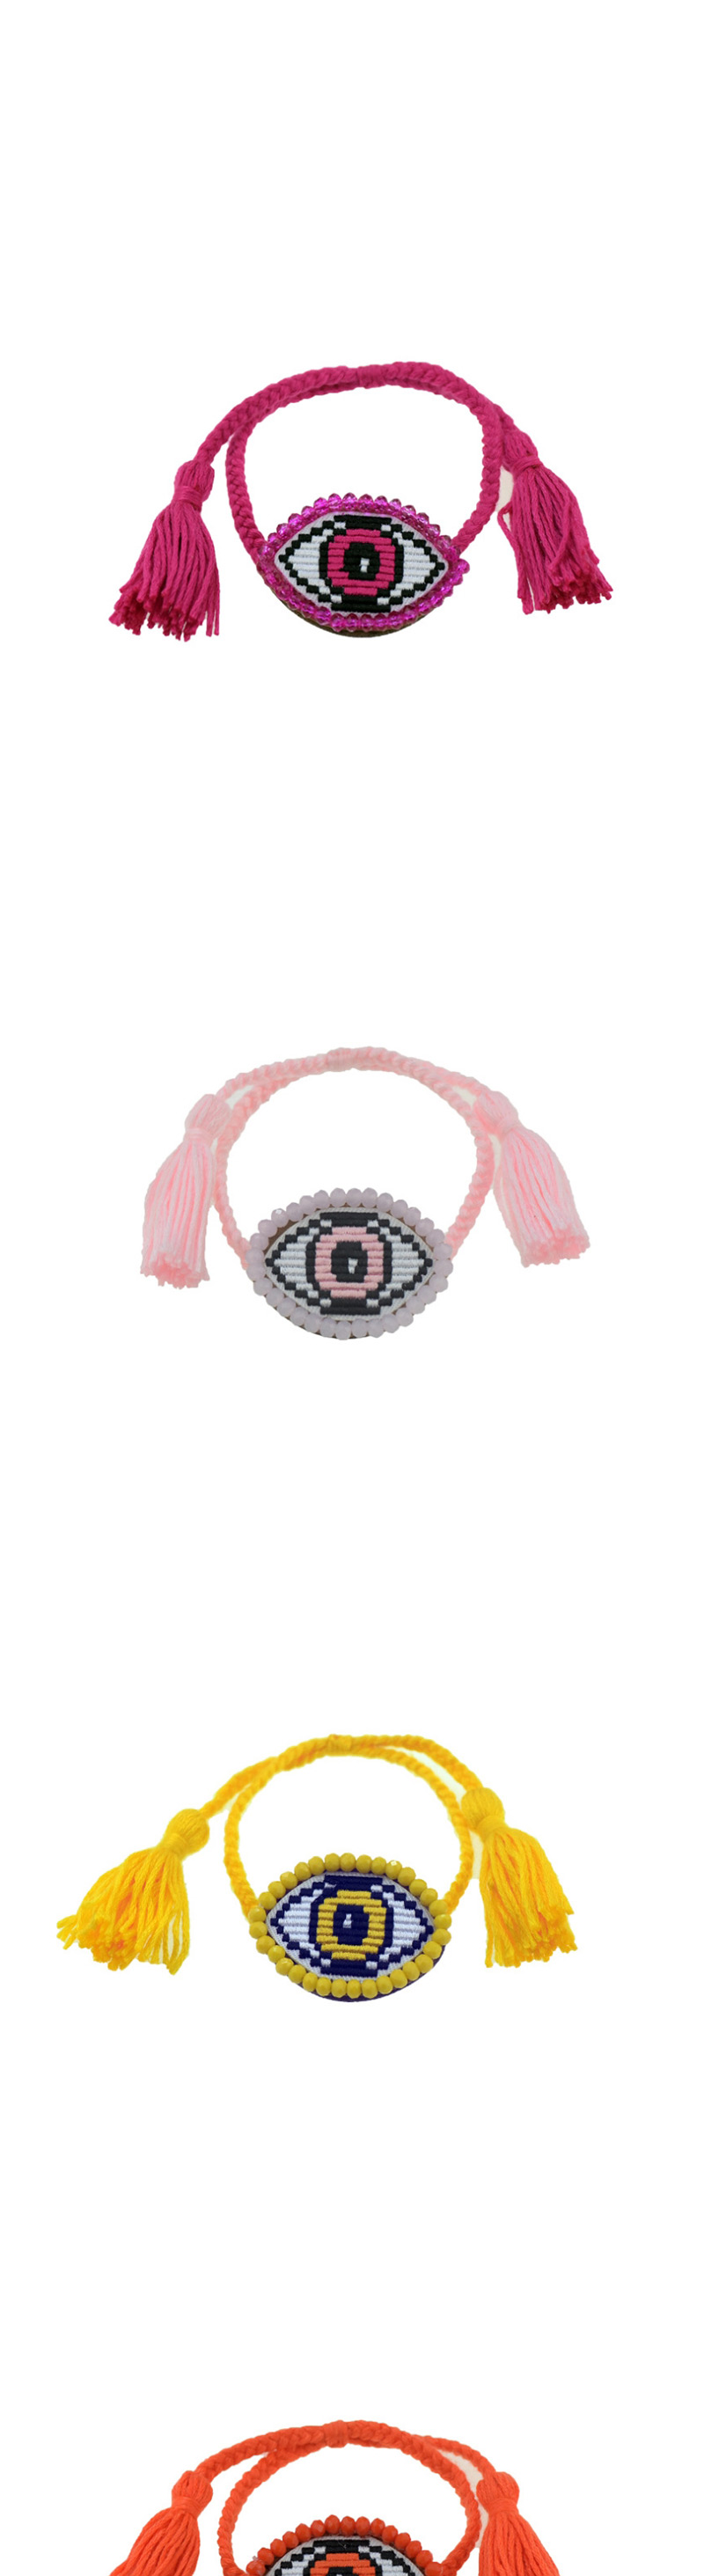 Fashion Rose Red Embroidered Crystal Eye Multi-layer Bracelet,Fashion Bracelets